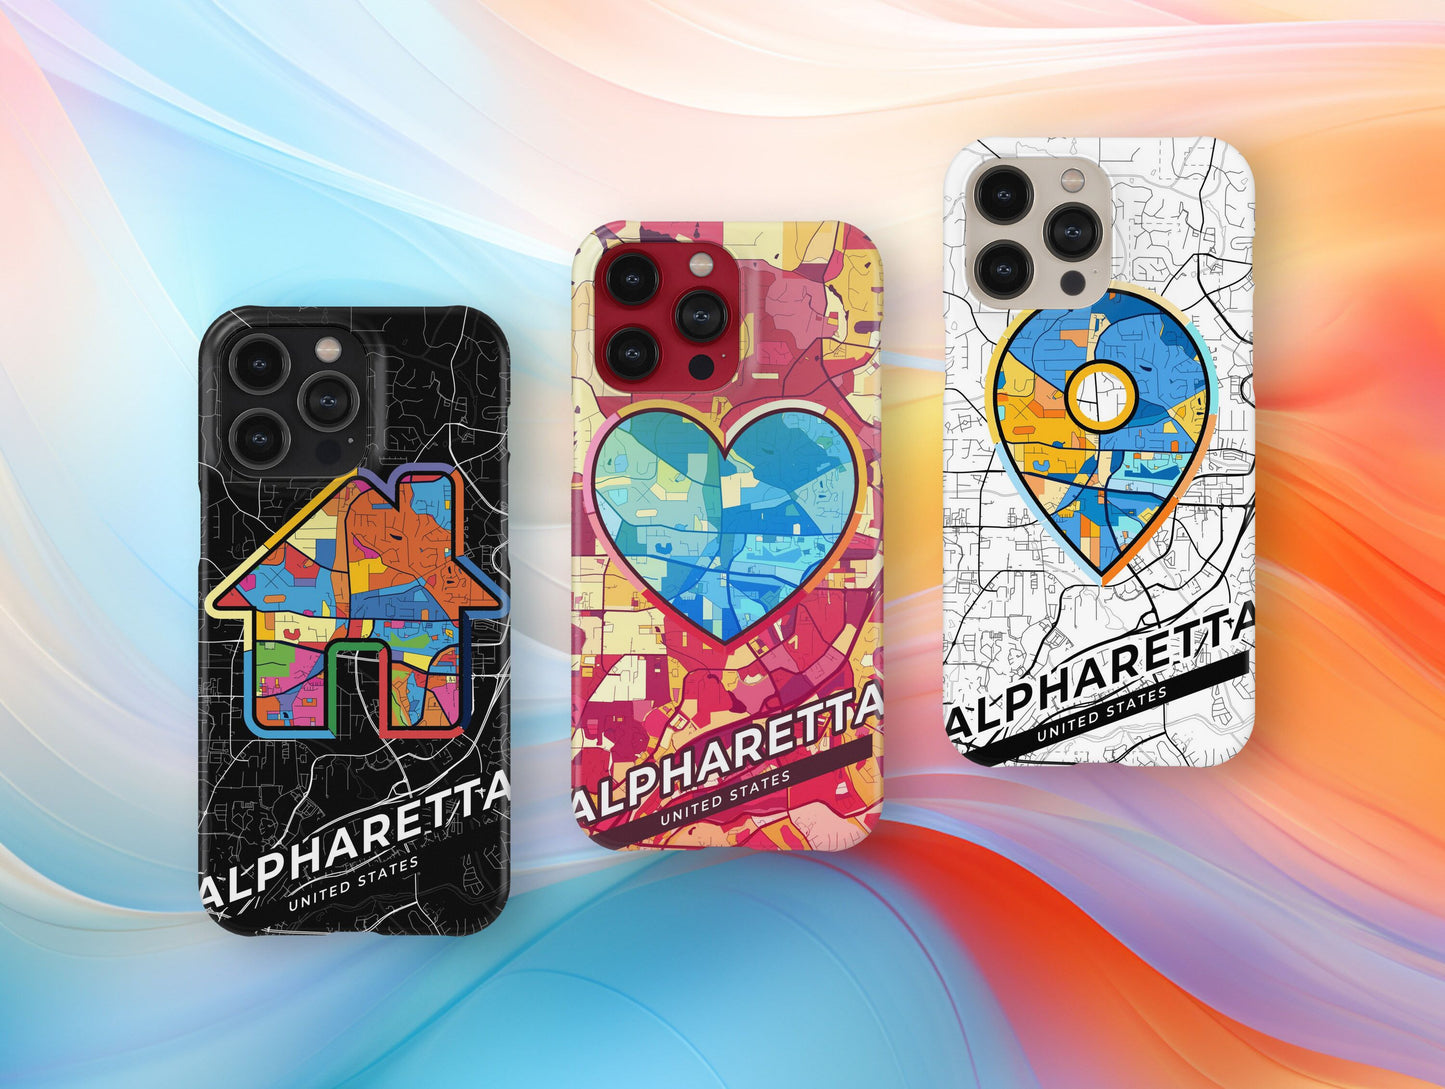 Alpharetta Georgia slim phone case with colorful icon. Birthday, wedding or housewarming gift. Couple match cases.